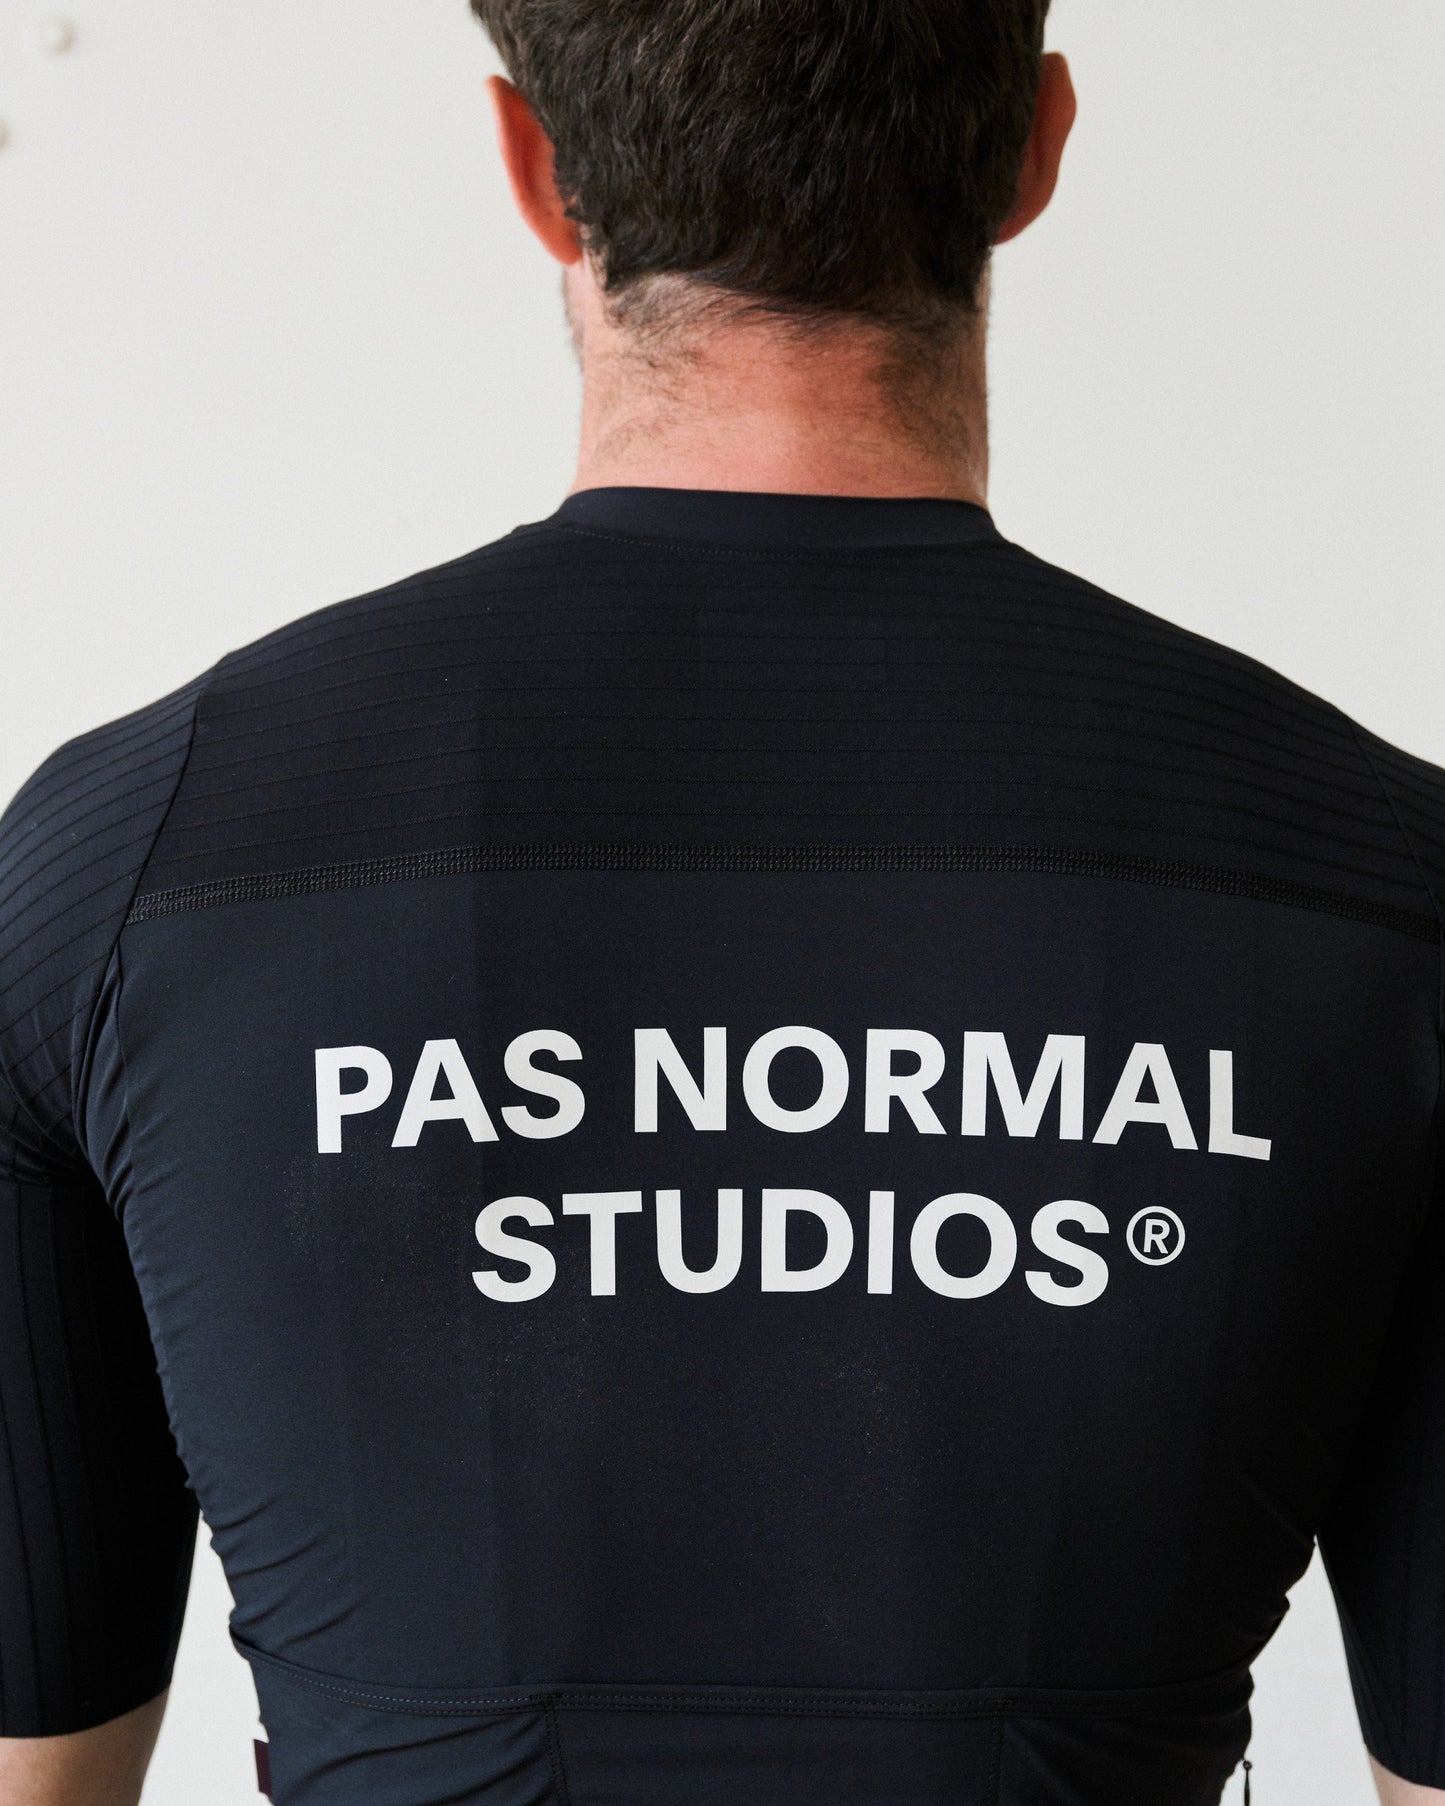 PAS NORMAL STUDIOS Essential Light Jersey Black